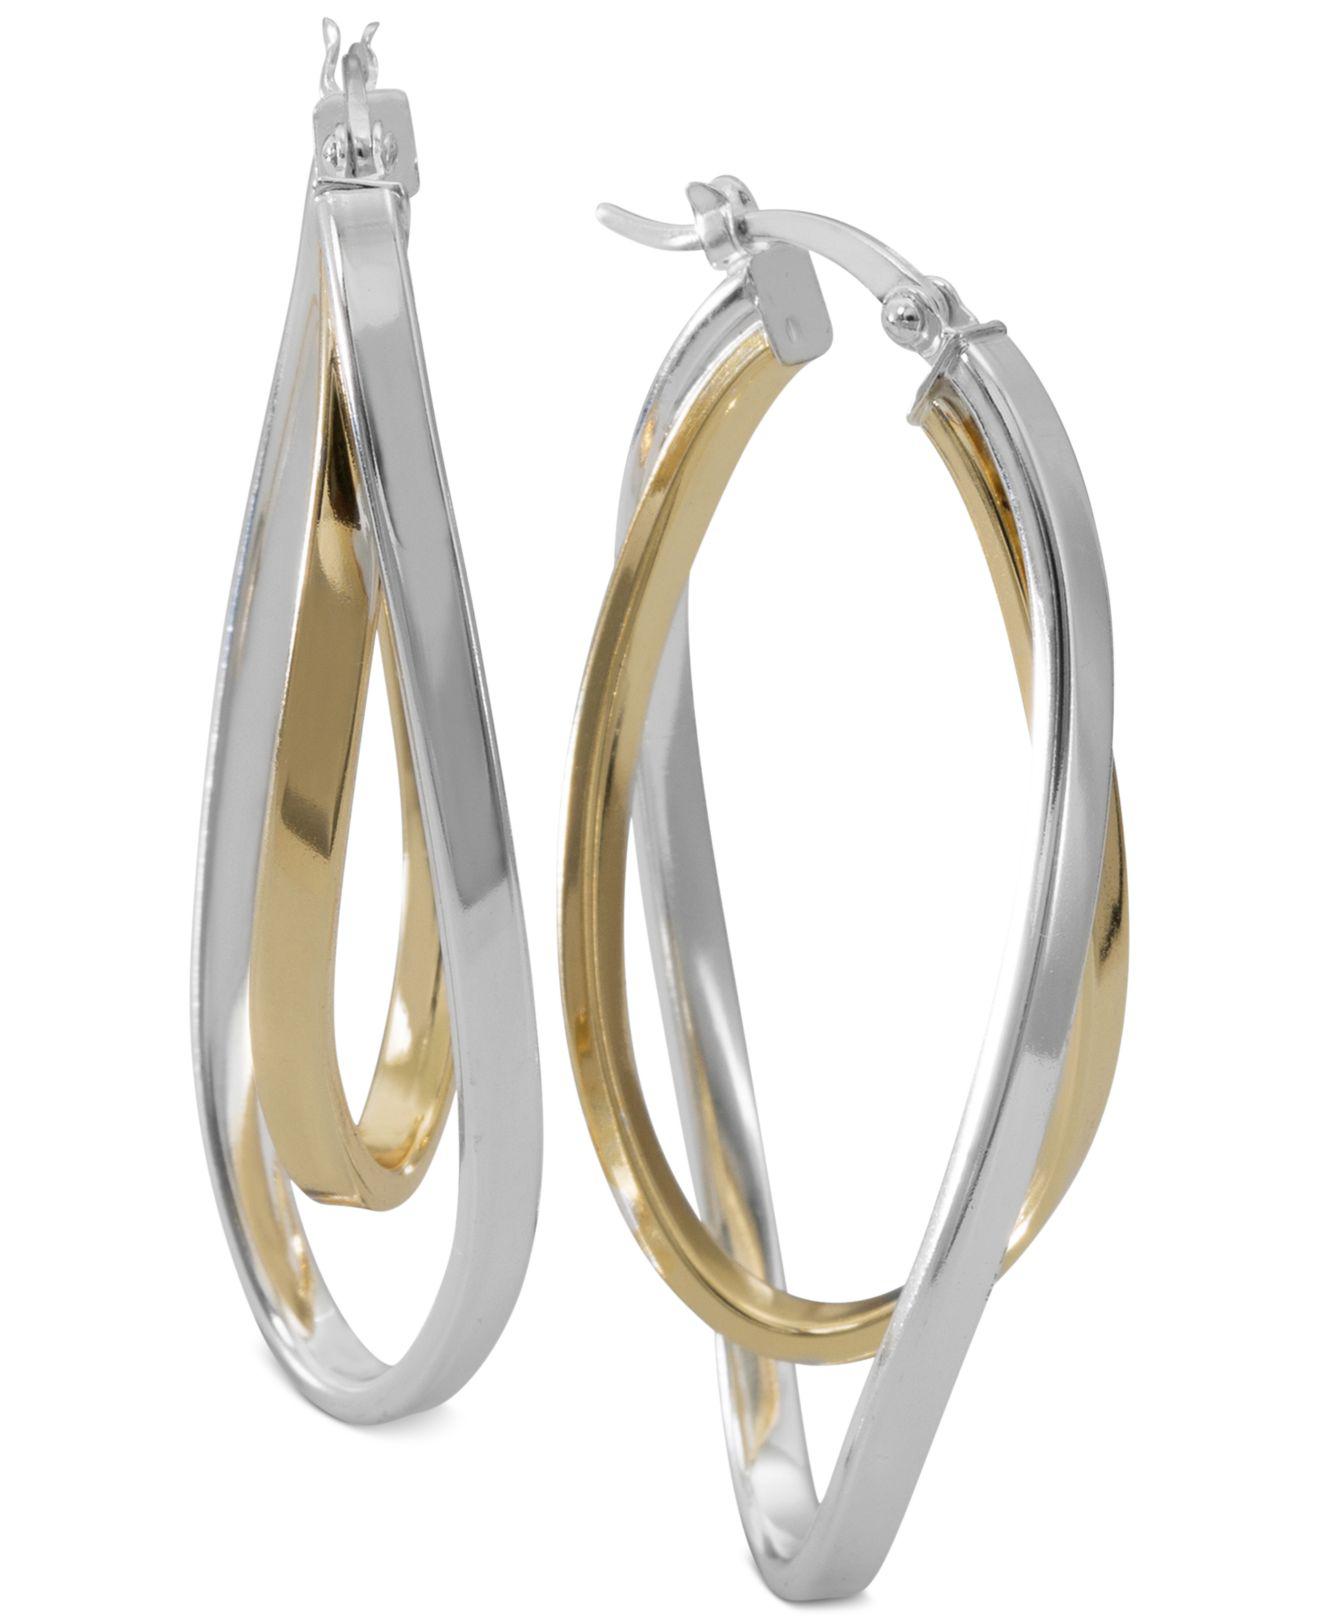 Macys Two Tone Twisted Hoop Earrings In Sterling Silver And 14k Gold Plate In Metallic Lyst 3038